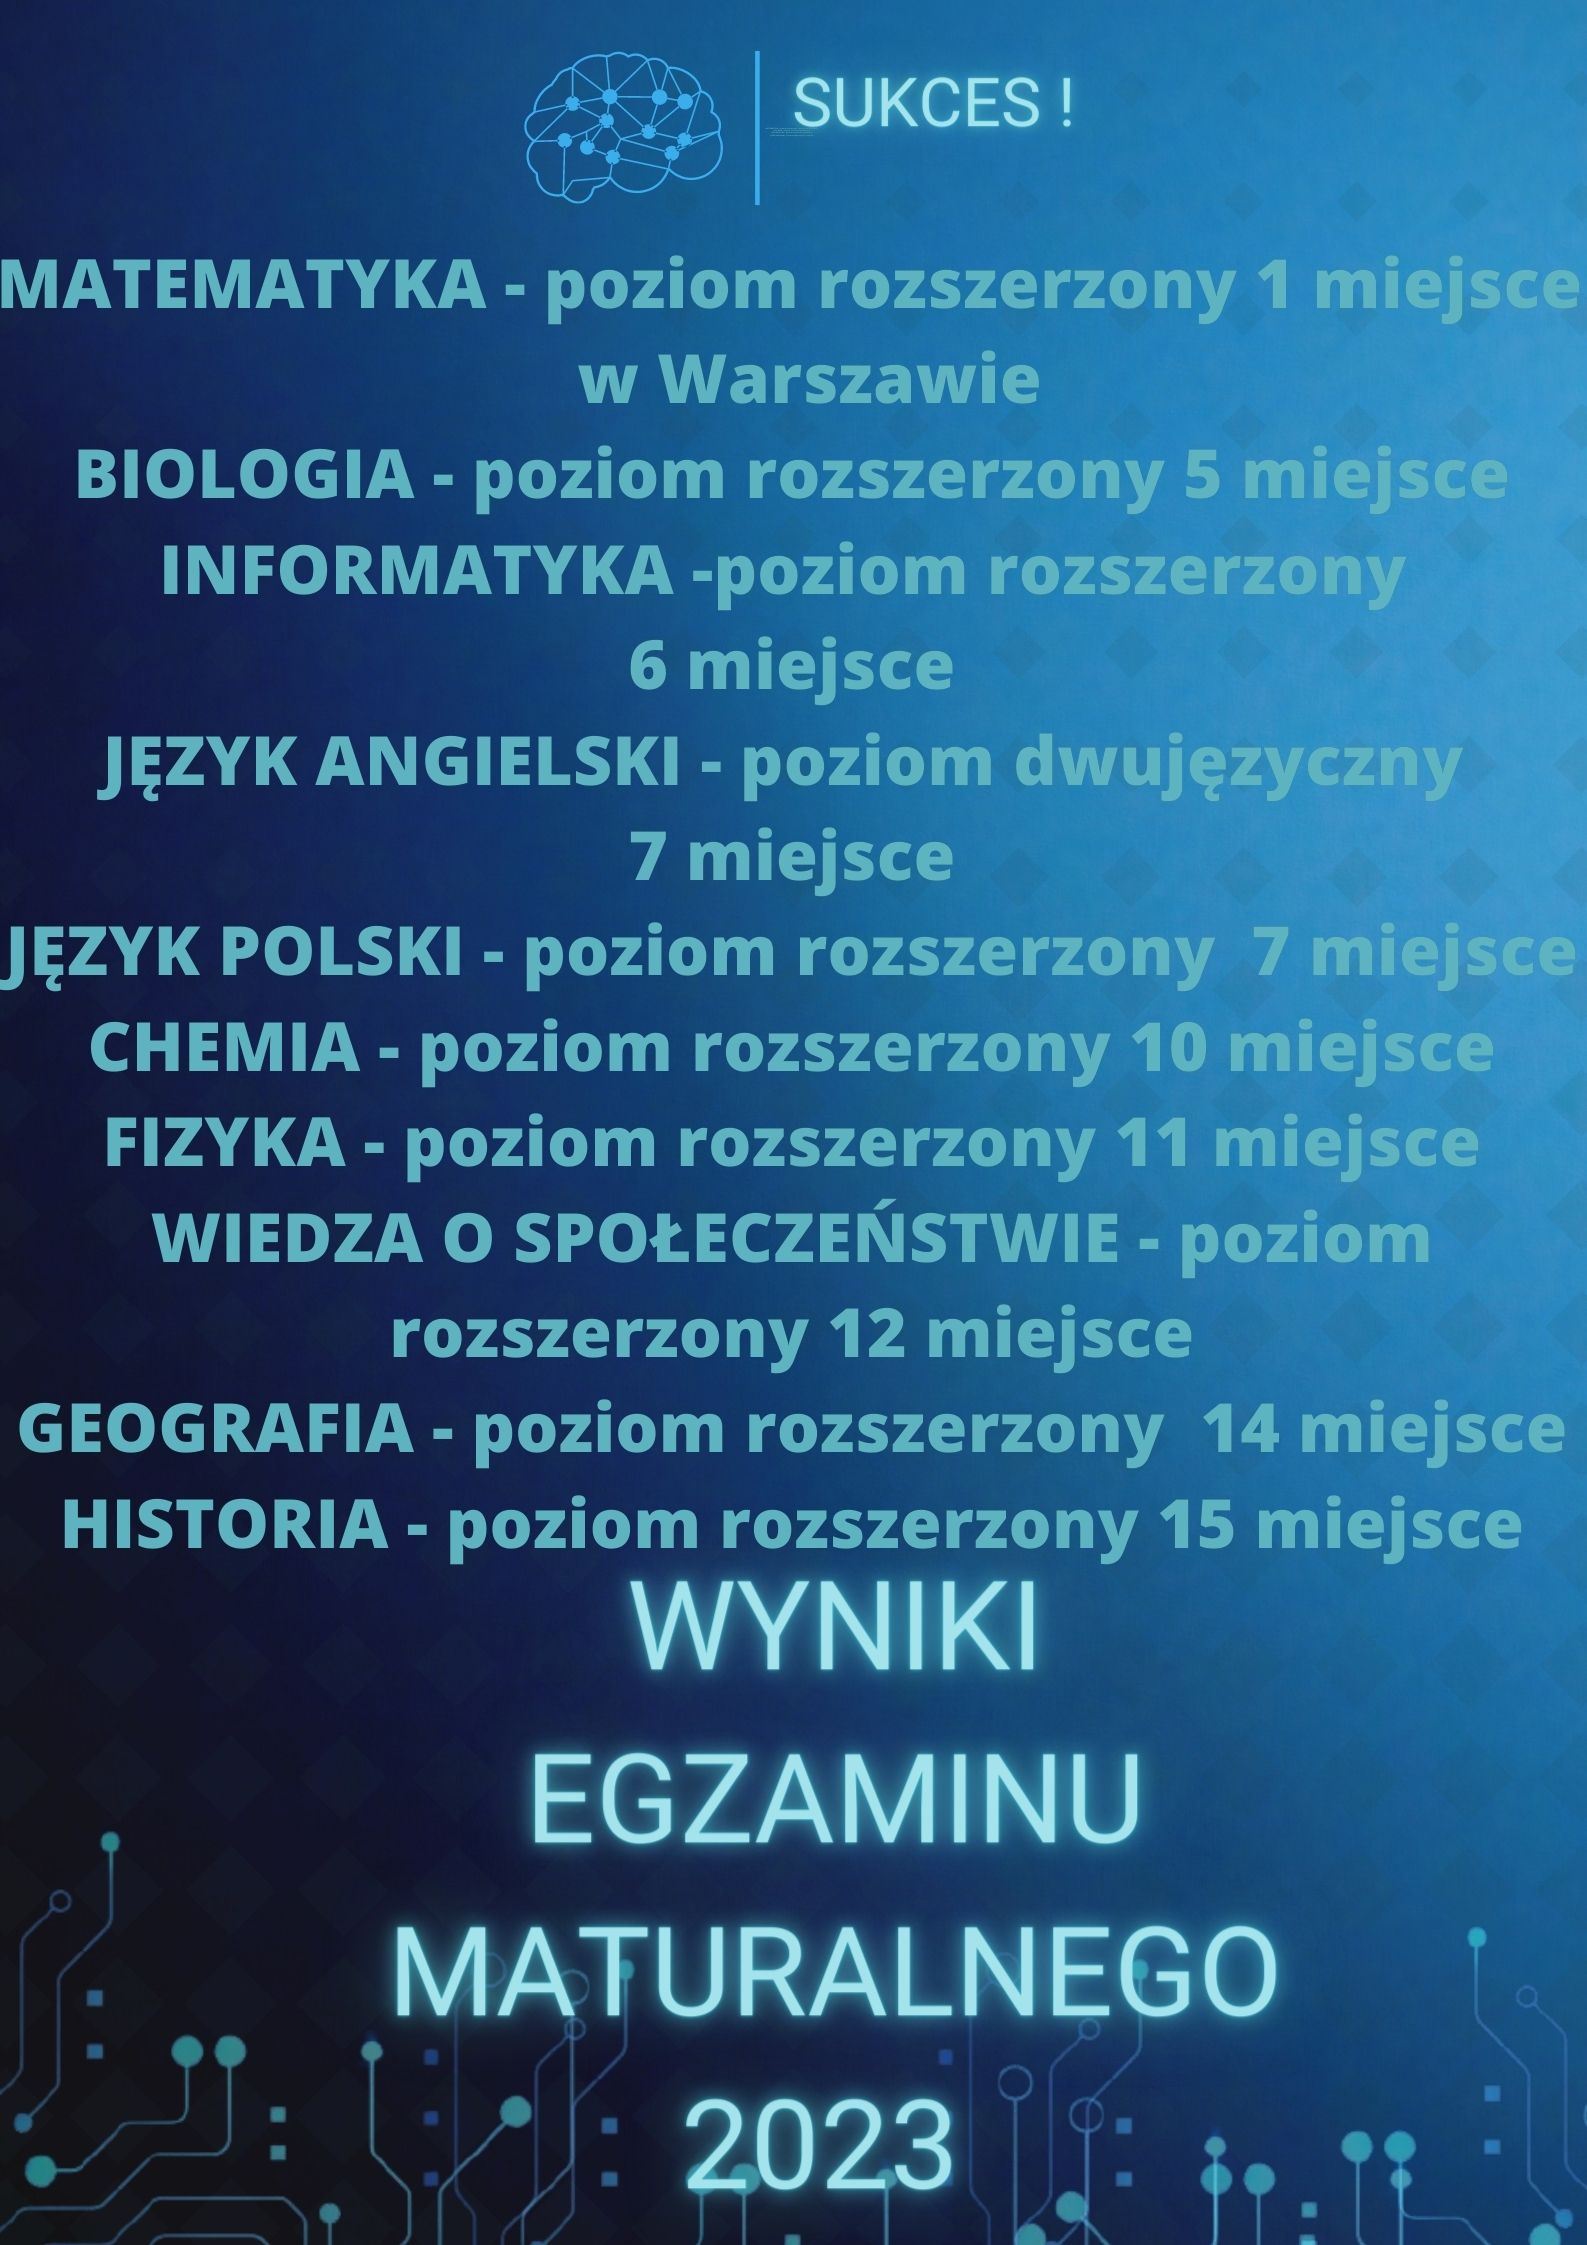 You are currently viewing Wyniki egzaminu maturalnego 2023 r. Uwaga sukces!